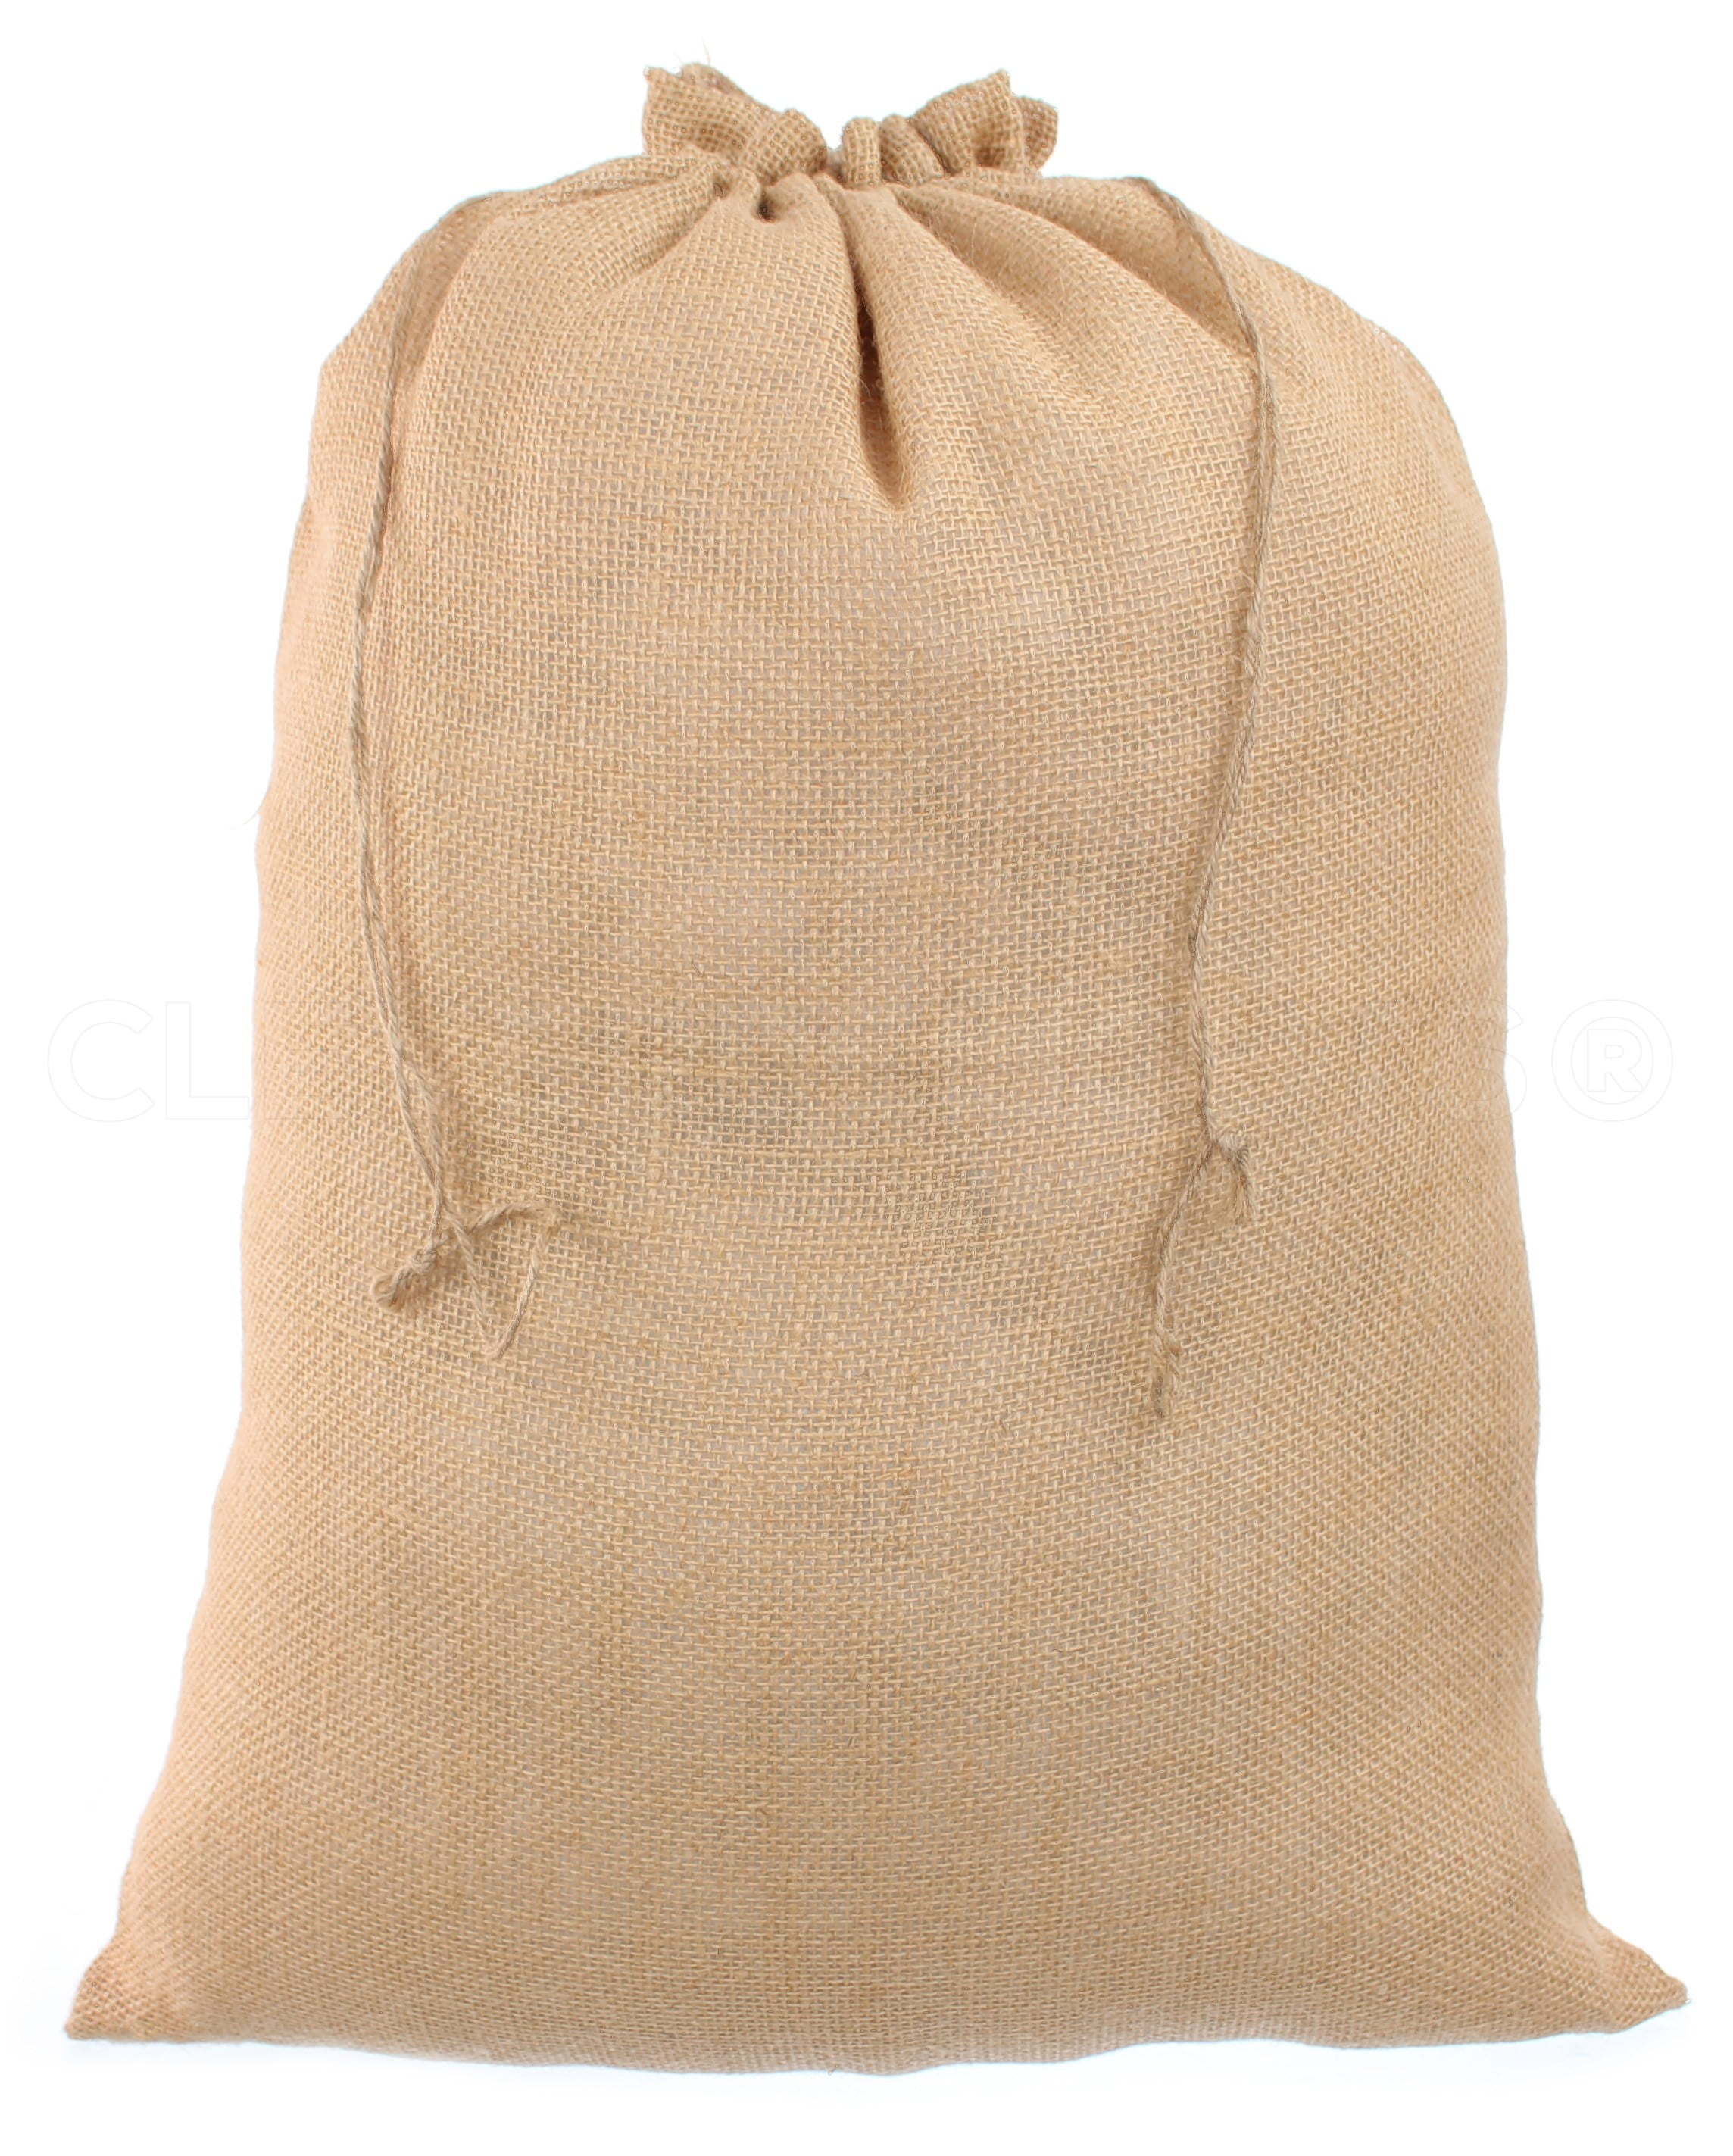 Choose Color 12-Pack 12" x 14" Large Burlap Jute Gift Bags with Drawstrings 